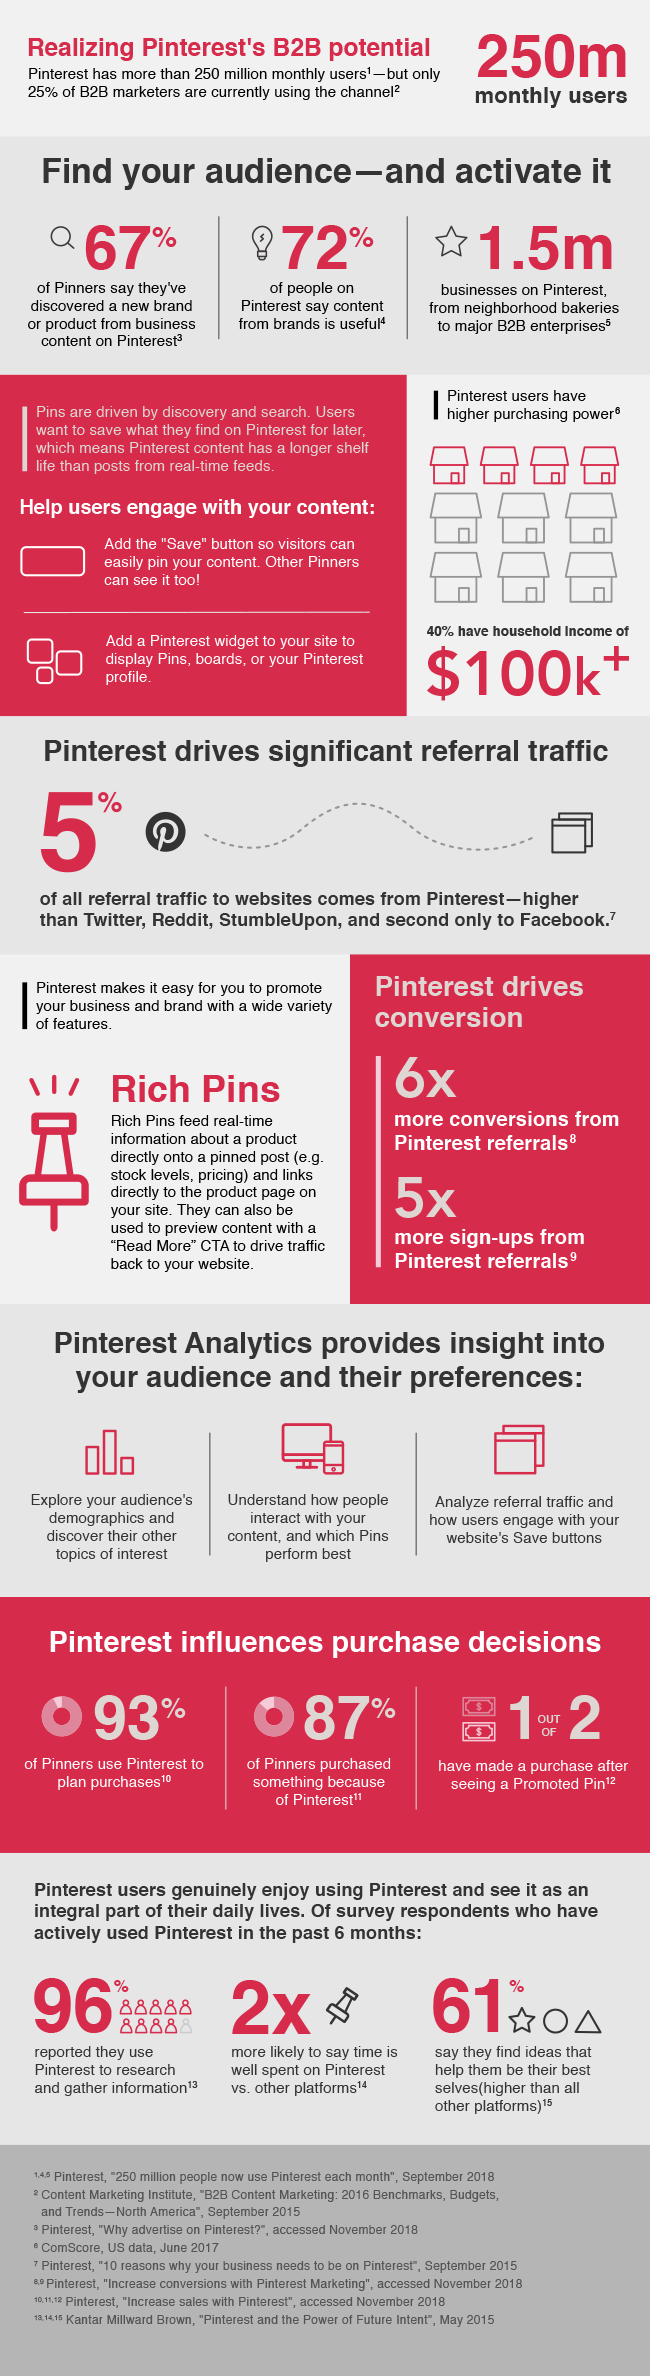 Pinterest Infographic 2018